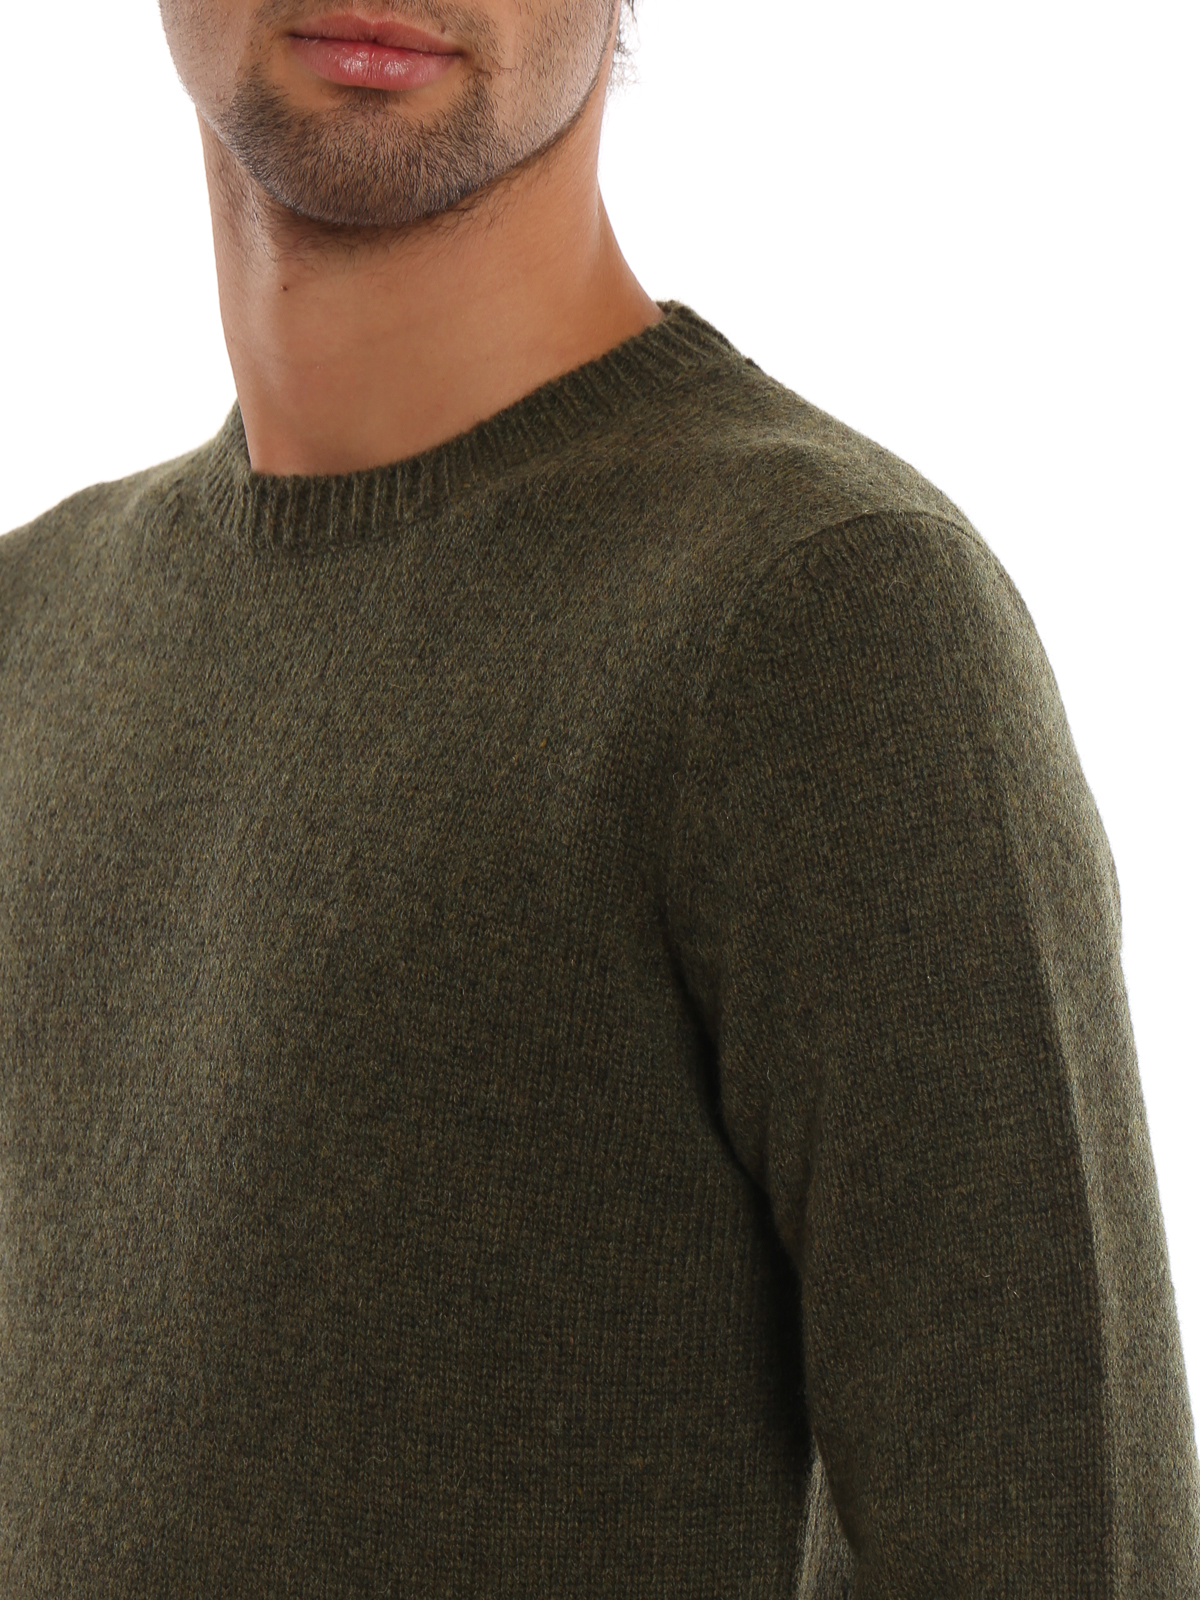 prada crew neck sweater